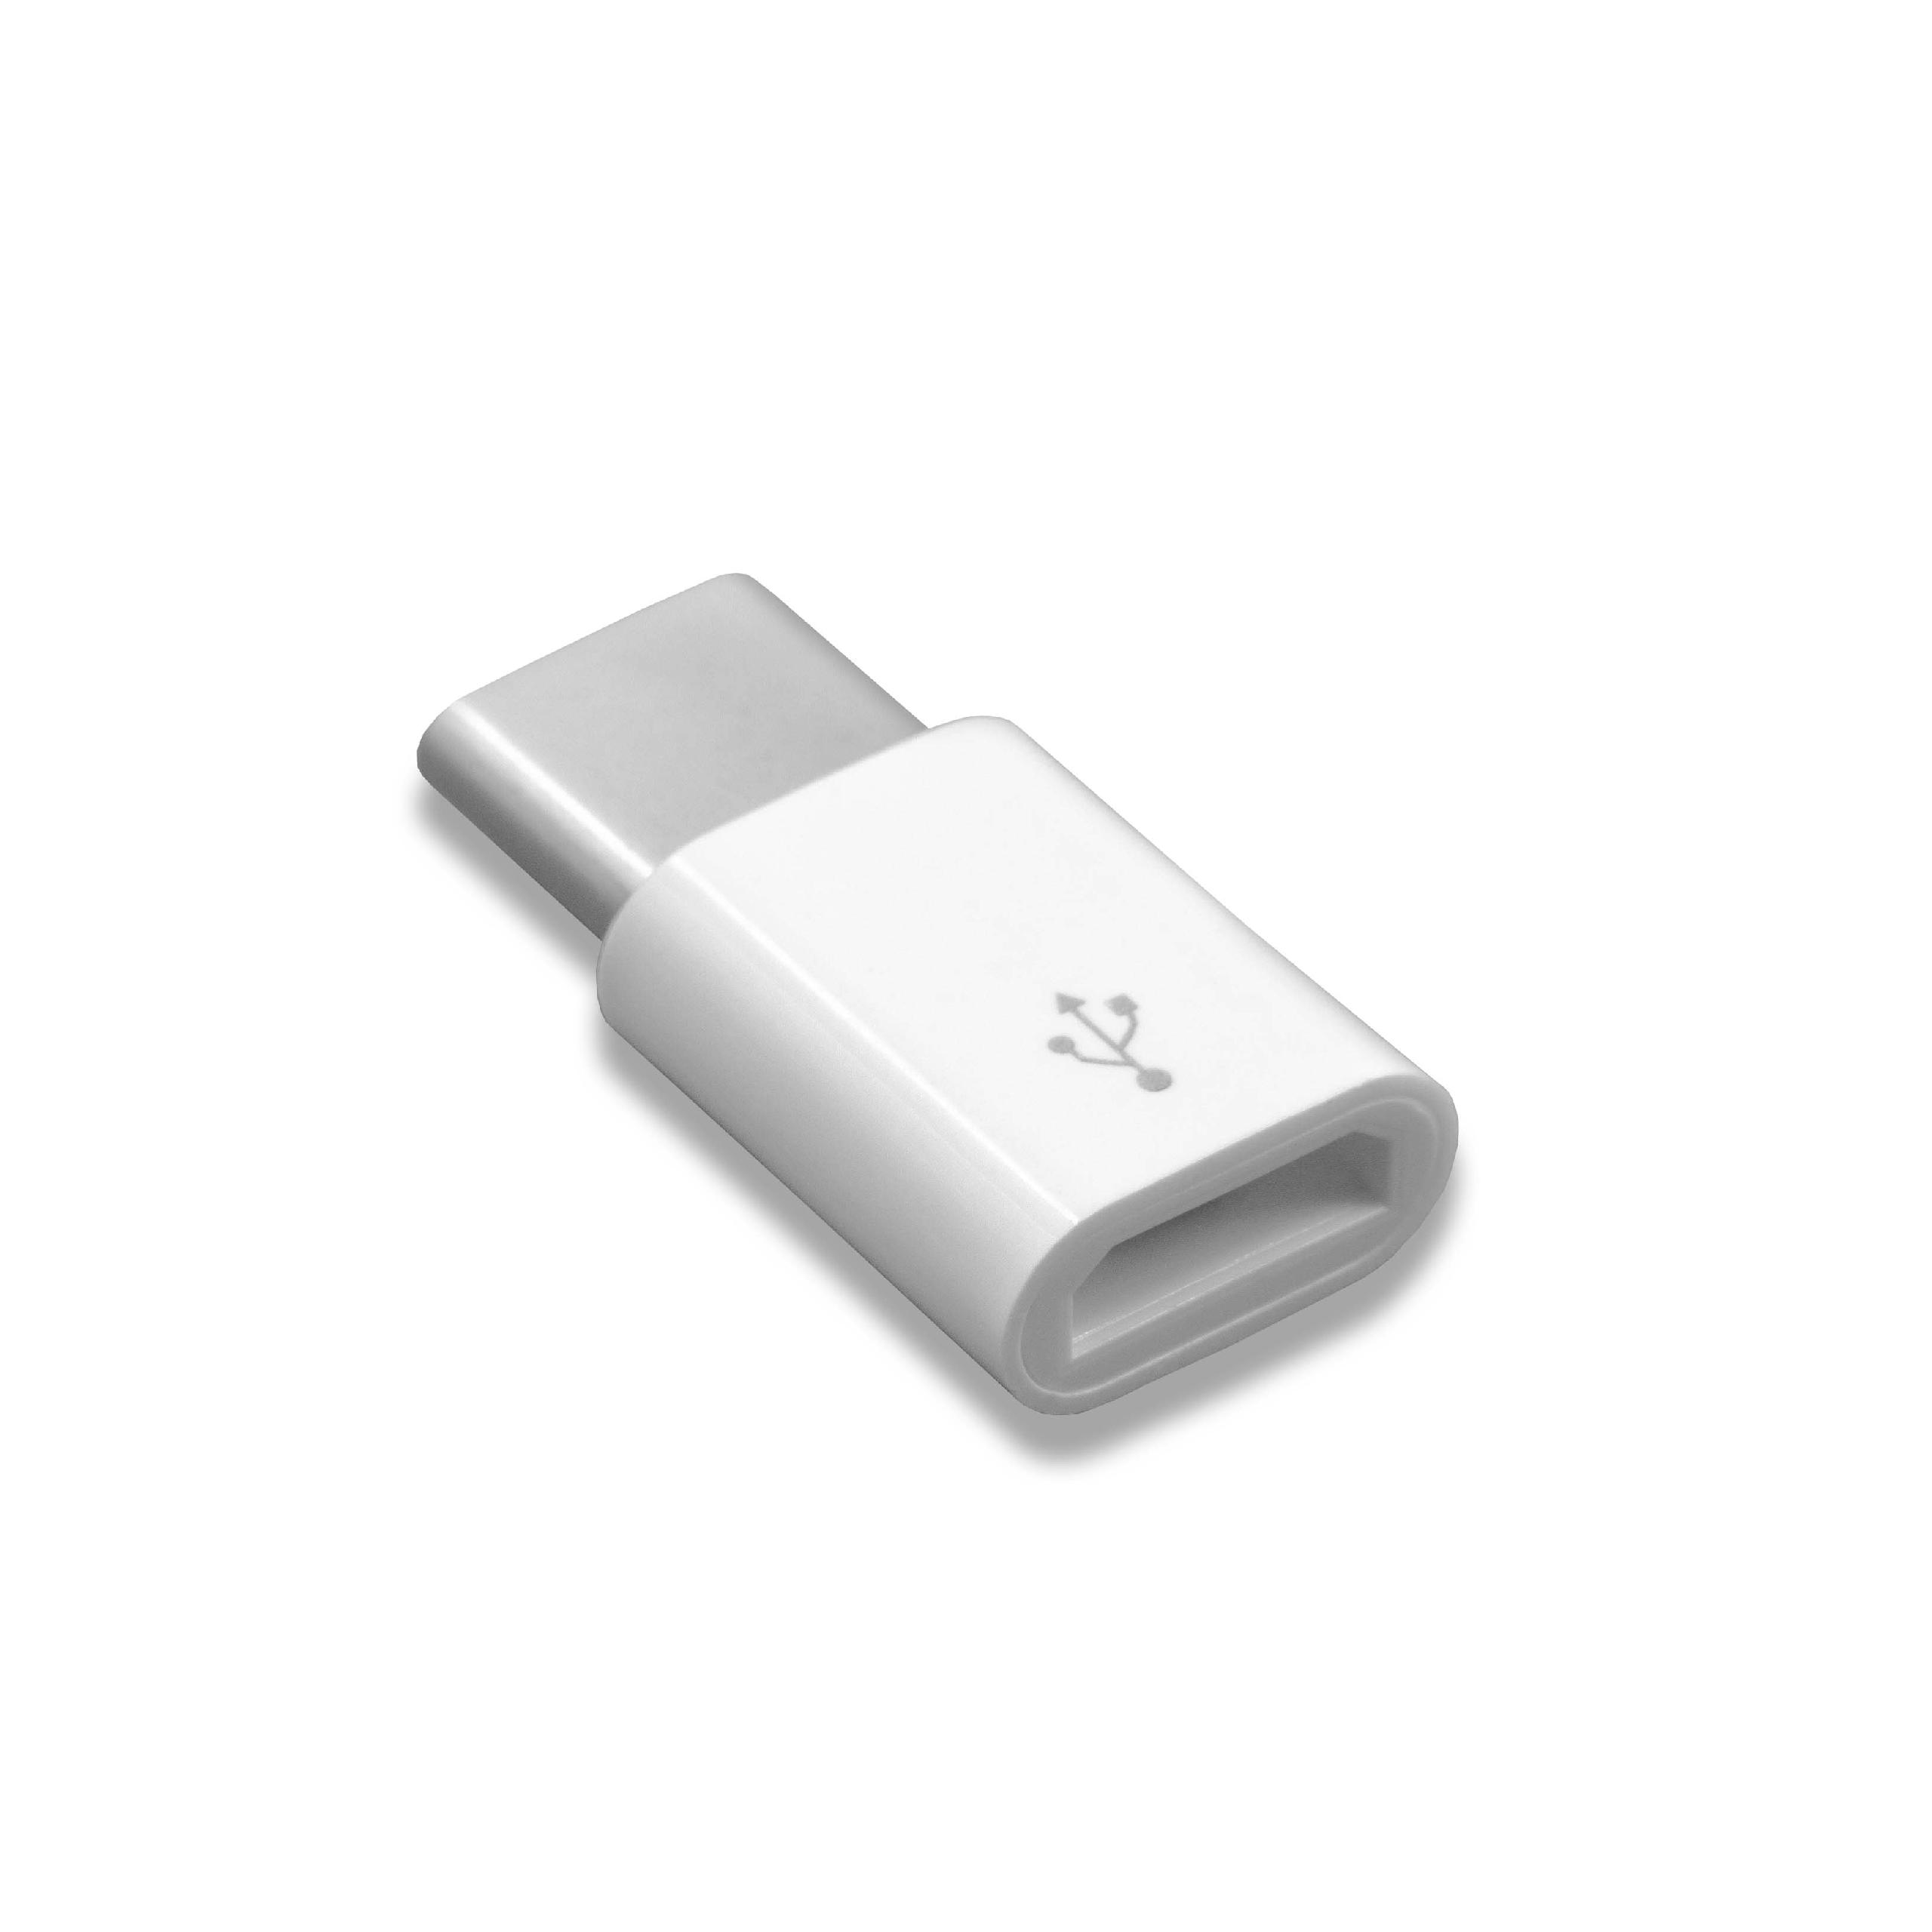 Adattatore OTG daUSB tipo C (maschio) a micro USB (femmina) per smartphone, tablet, laptop